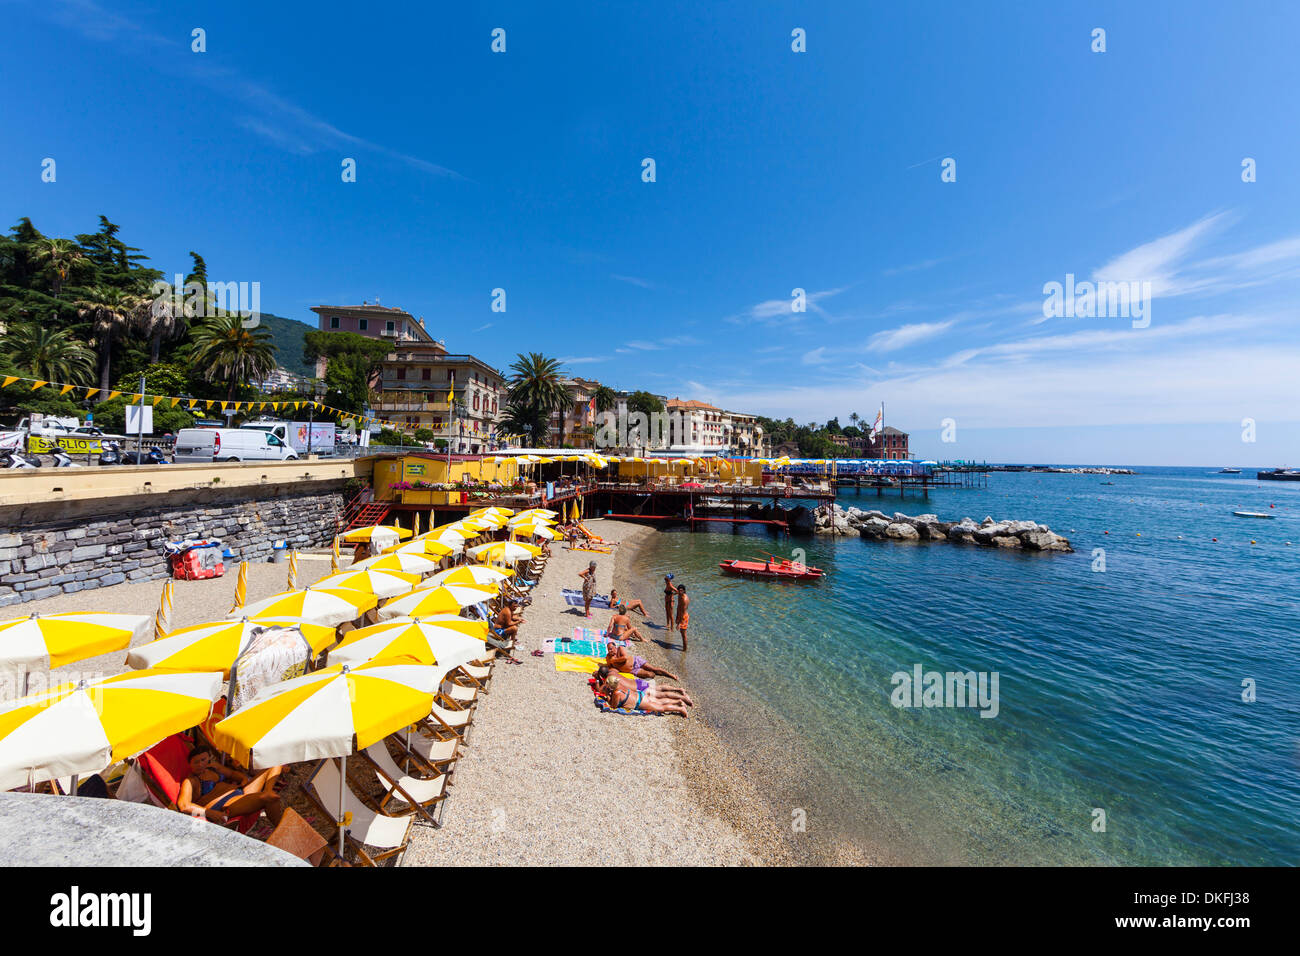 Beach, San Michele di Pagana district, Rapallo, seaside resort on the Gulf of Genoa, Italian Riviera, Liguria, Italy Stock Photo